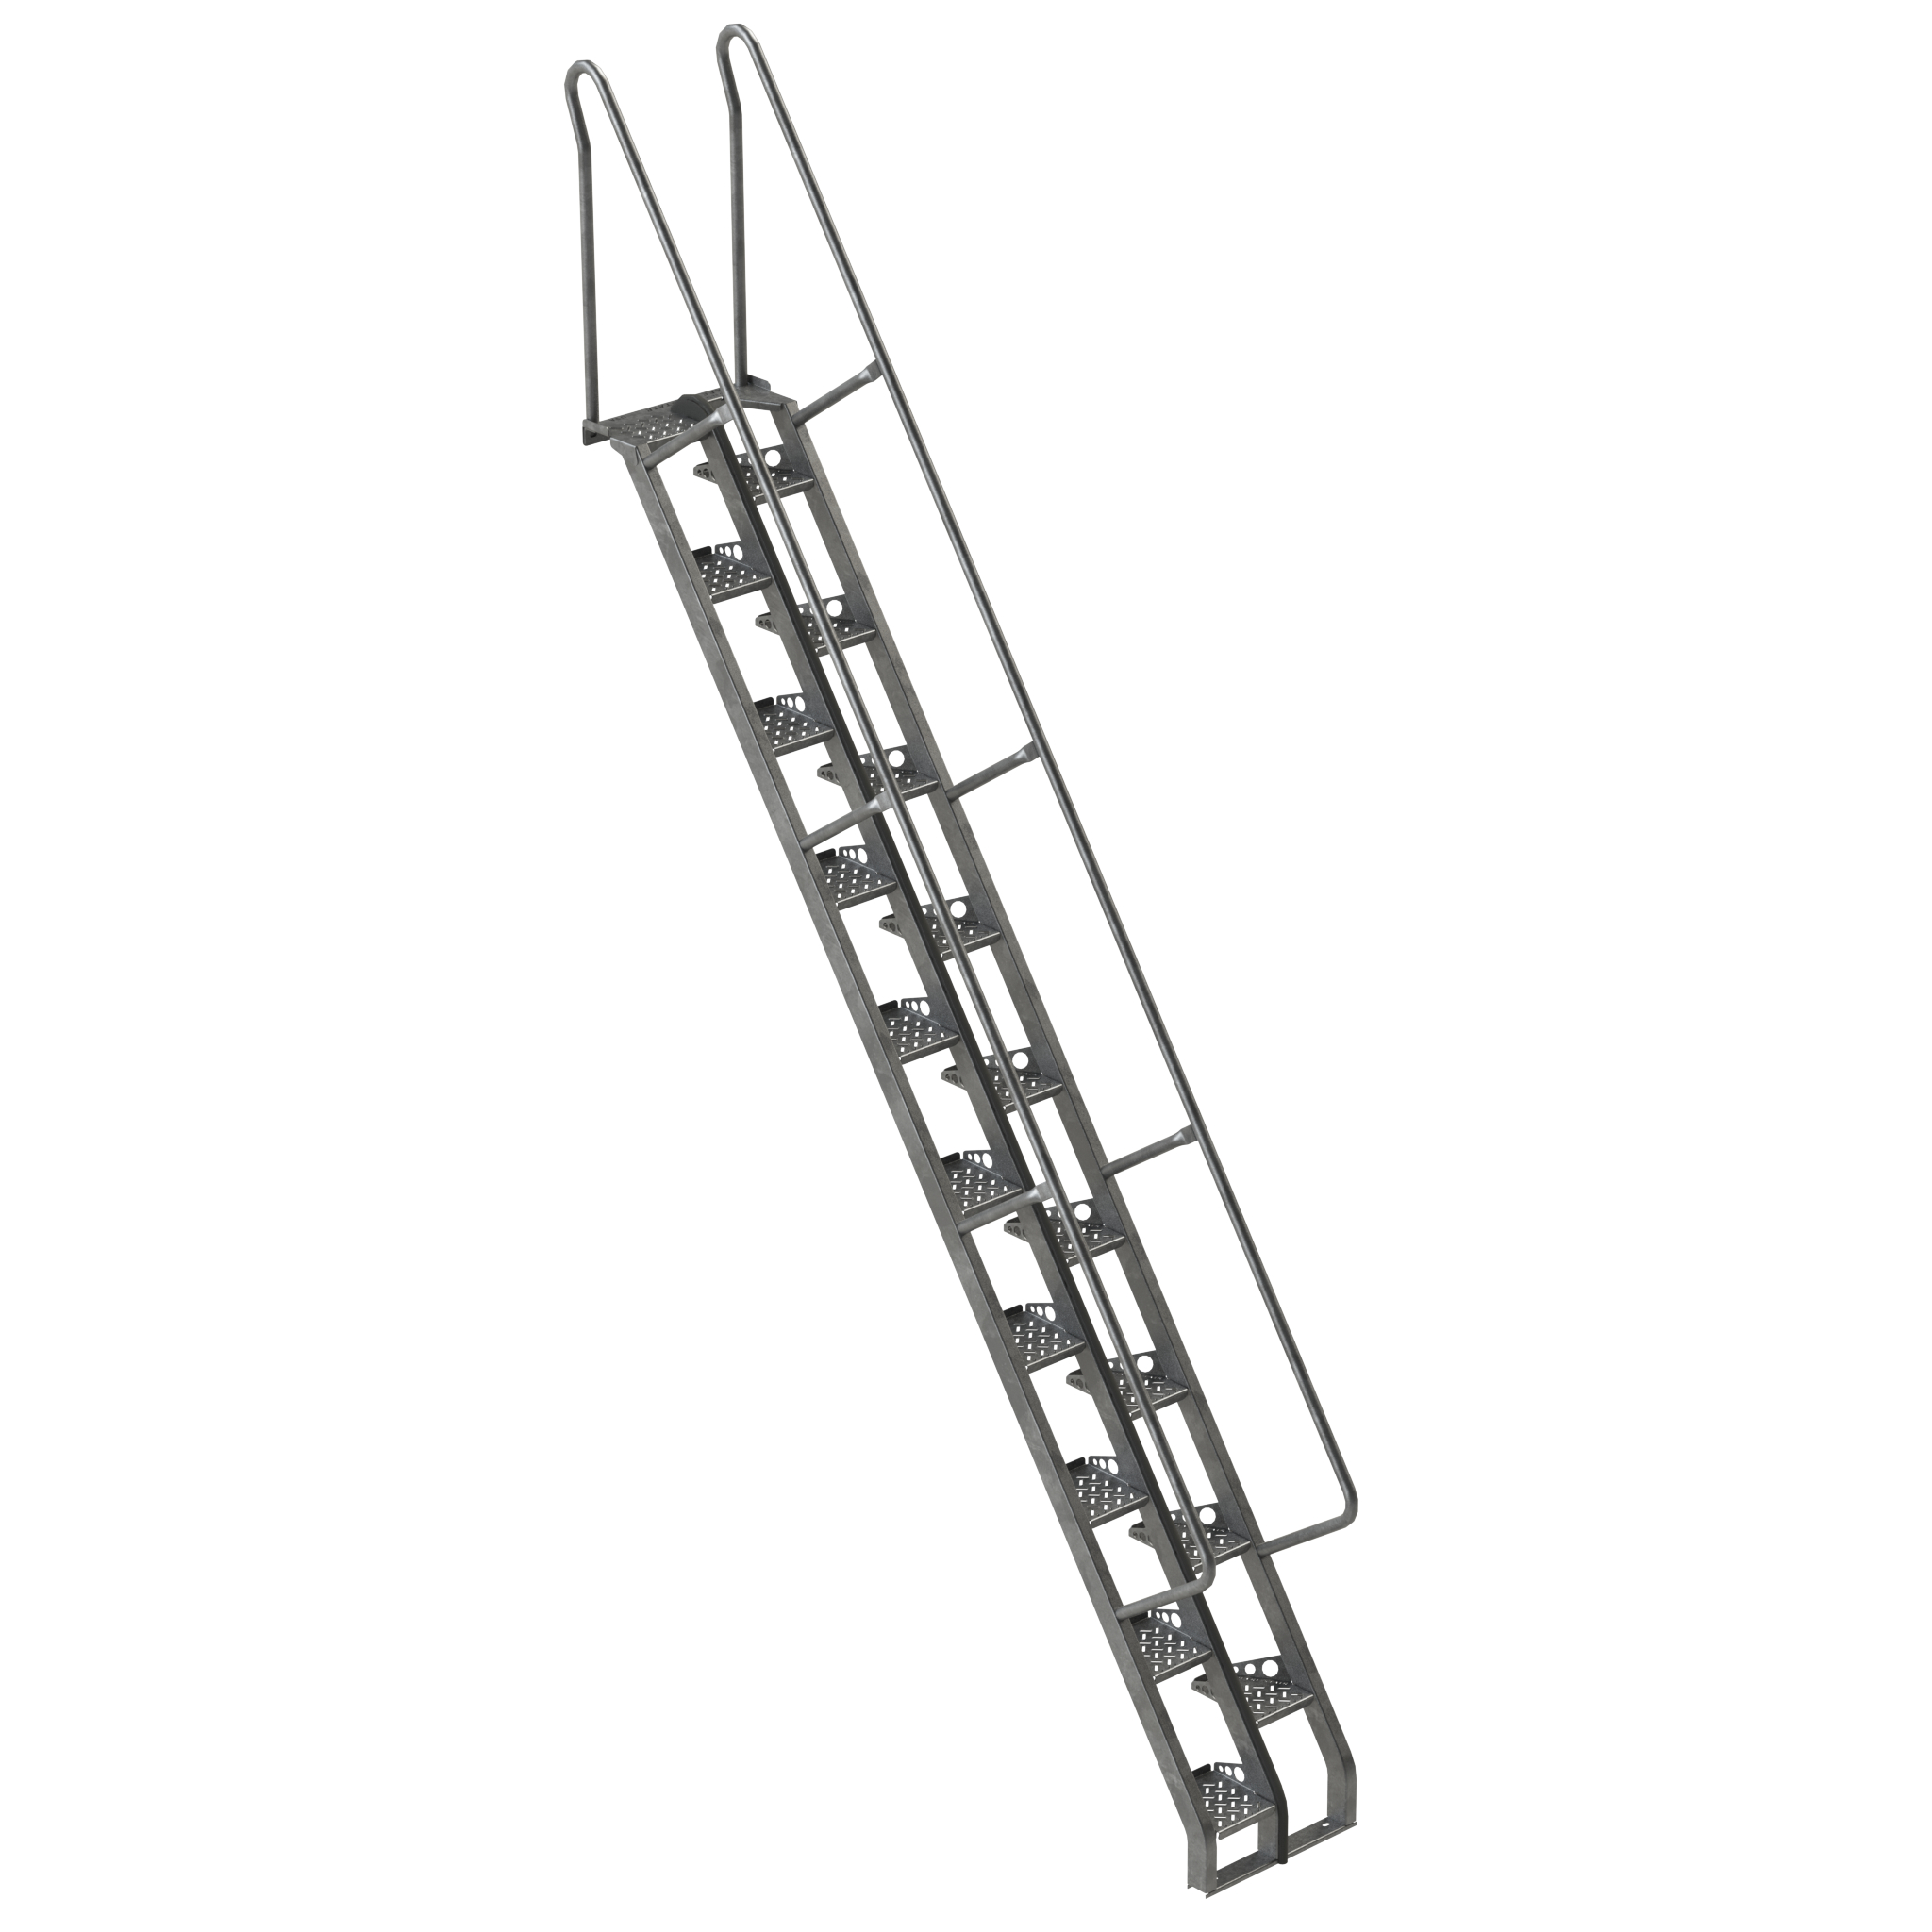 Alternating Tread Stair, Steel, Galvanized, 56 Degrees, Standard Handrail